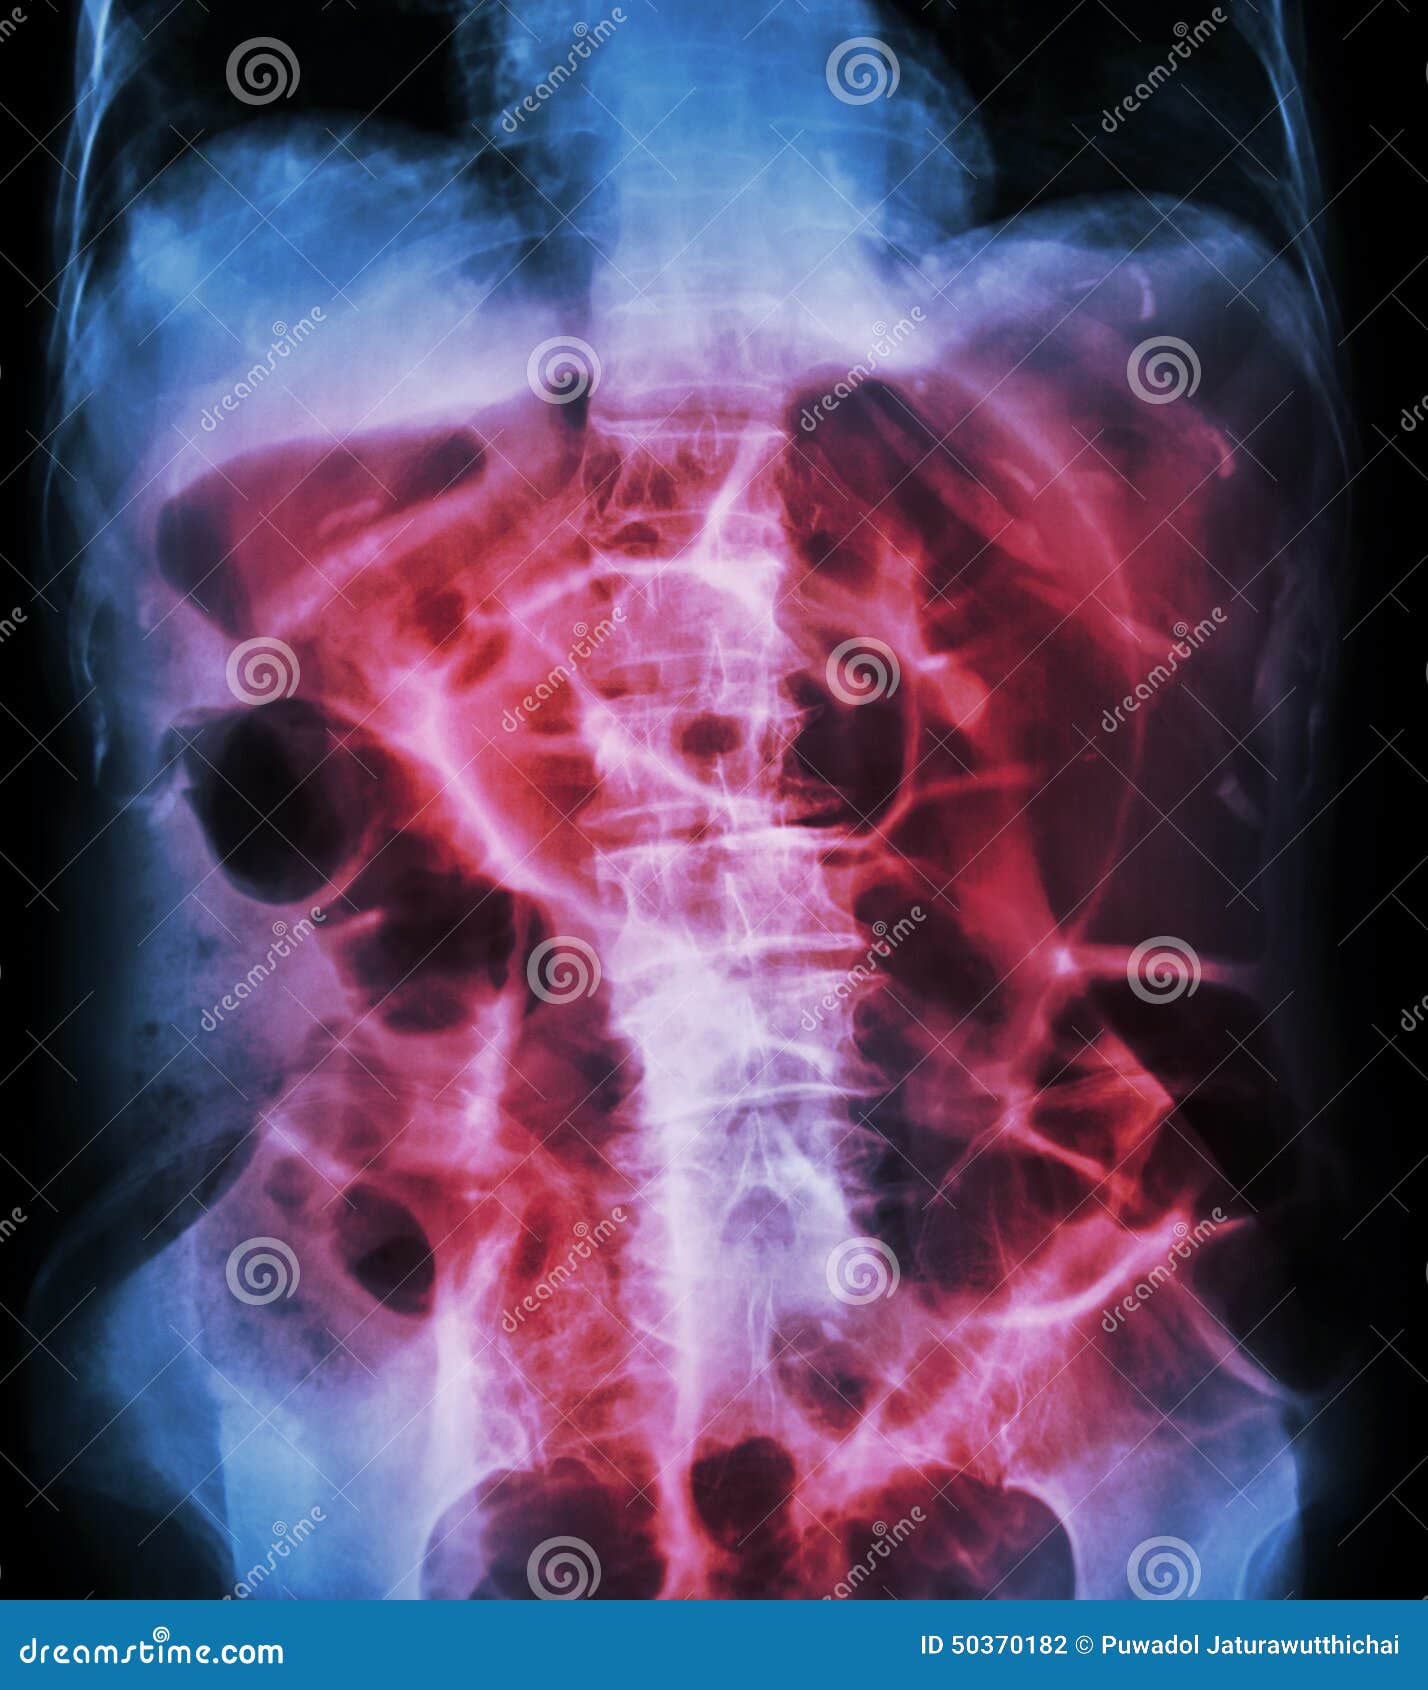 bowel obstruction ( x-ray abdomen supine position : large bowel